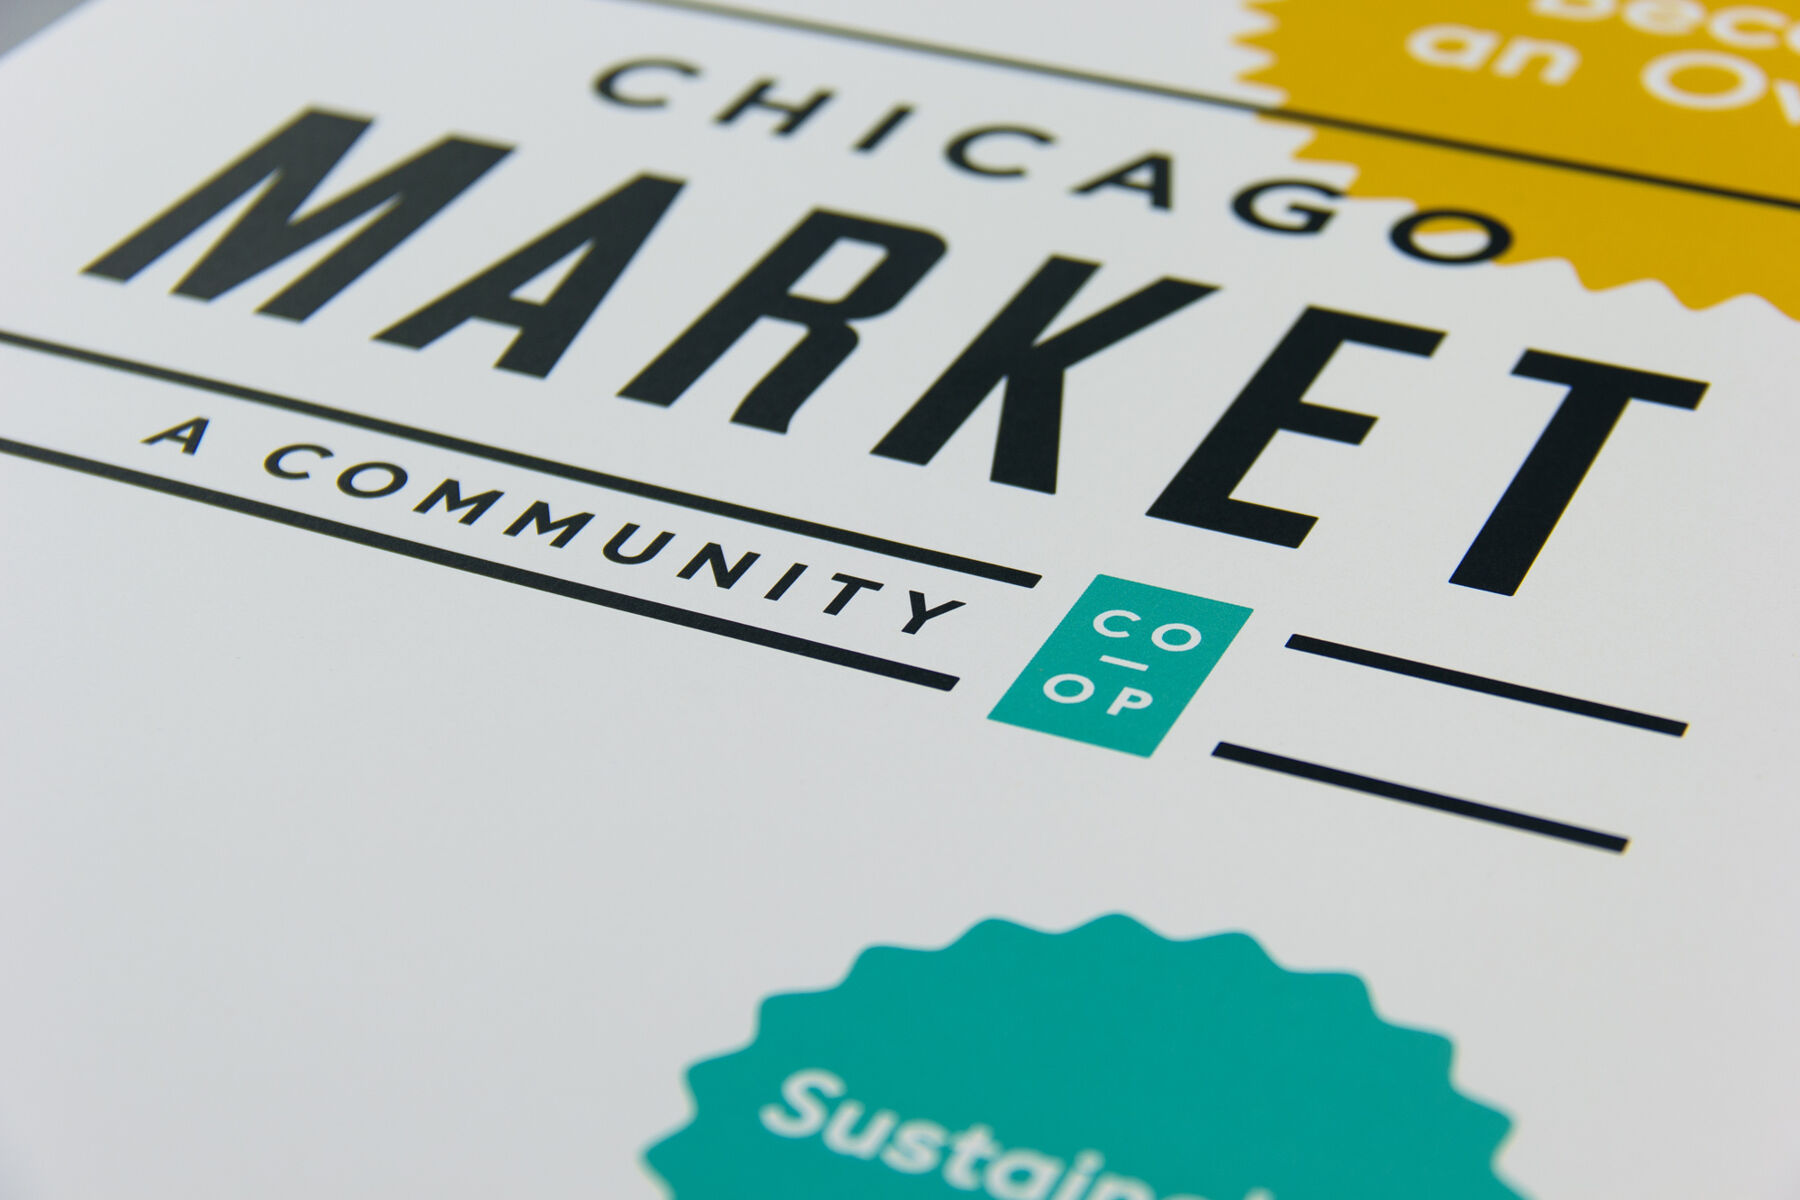 Name, Brand + Website for Chicago Market Firebelly Design